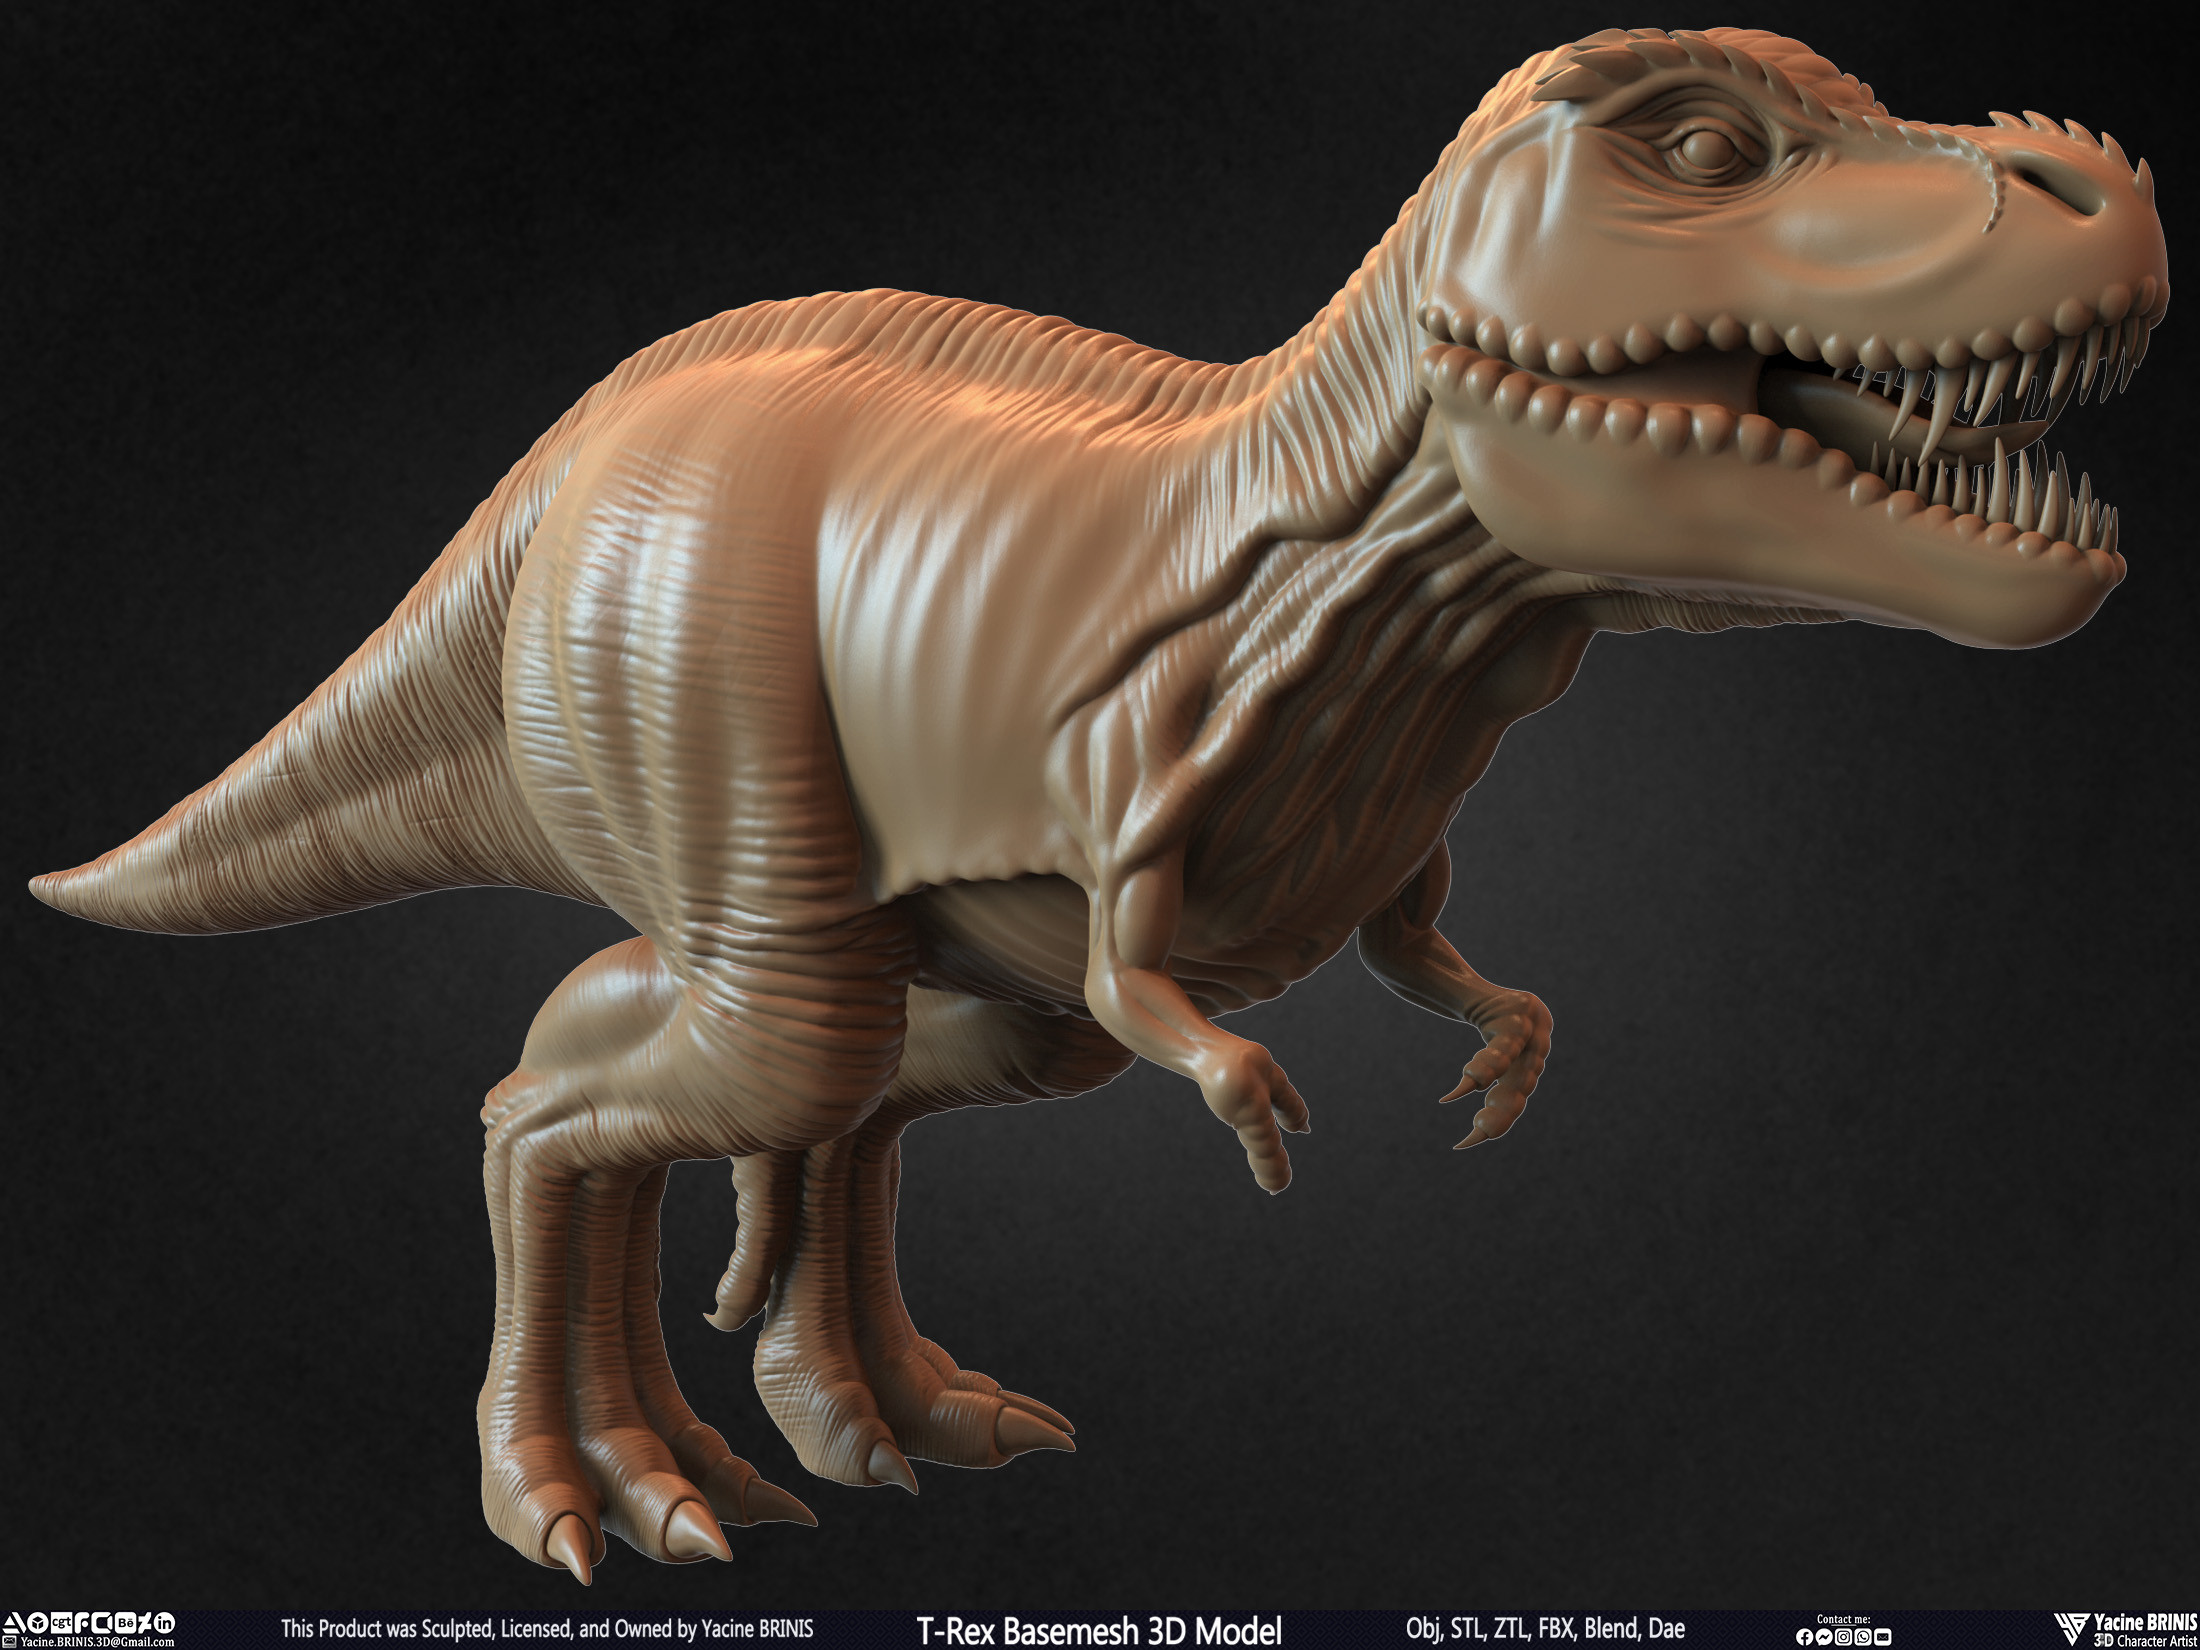 T-Rex Basemesh 3D Model (Tyrannosaurus Rex) Sculpted By Yacine BRINIS Set 004